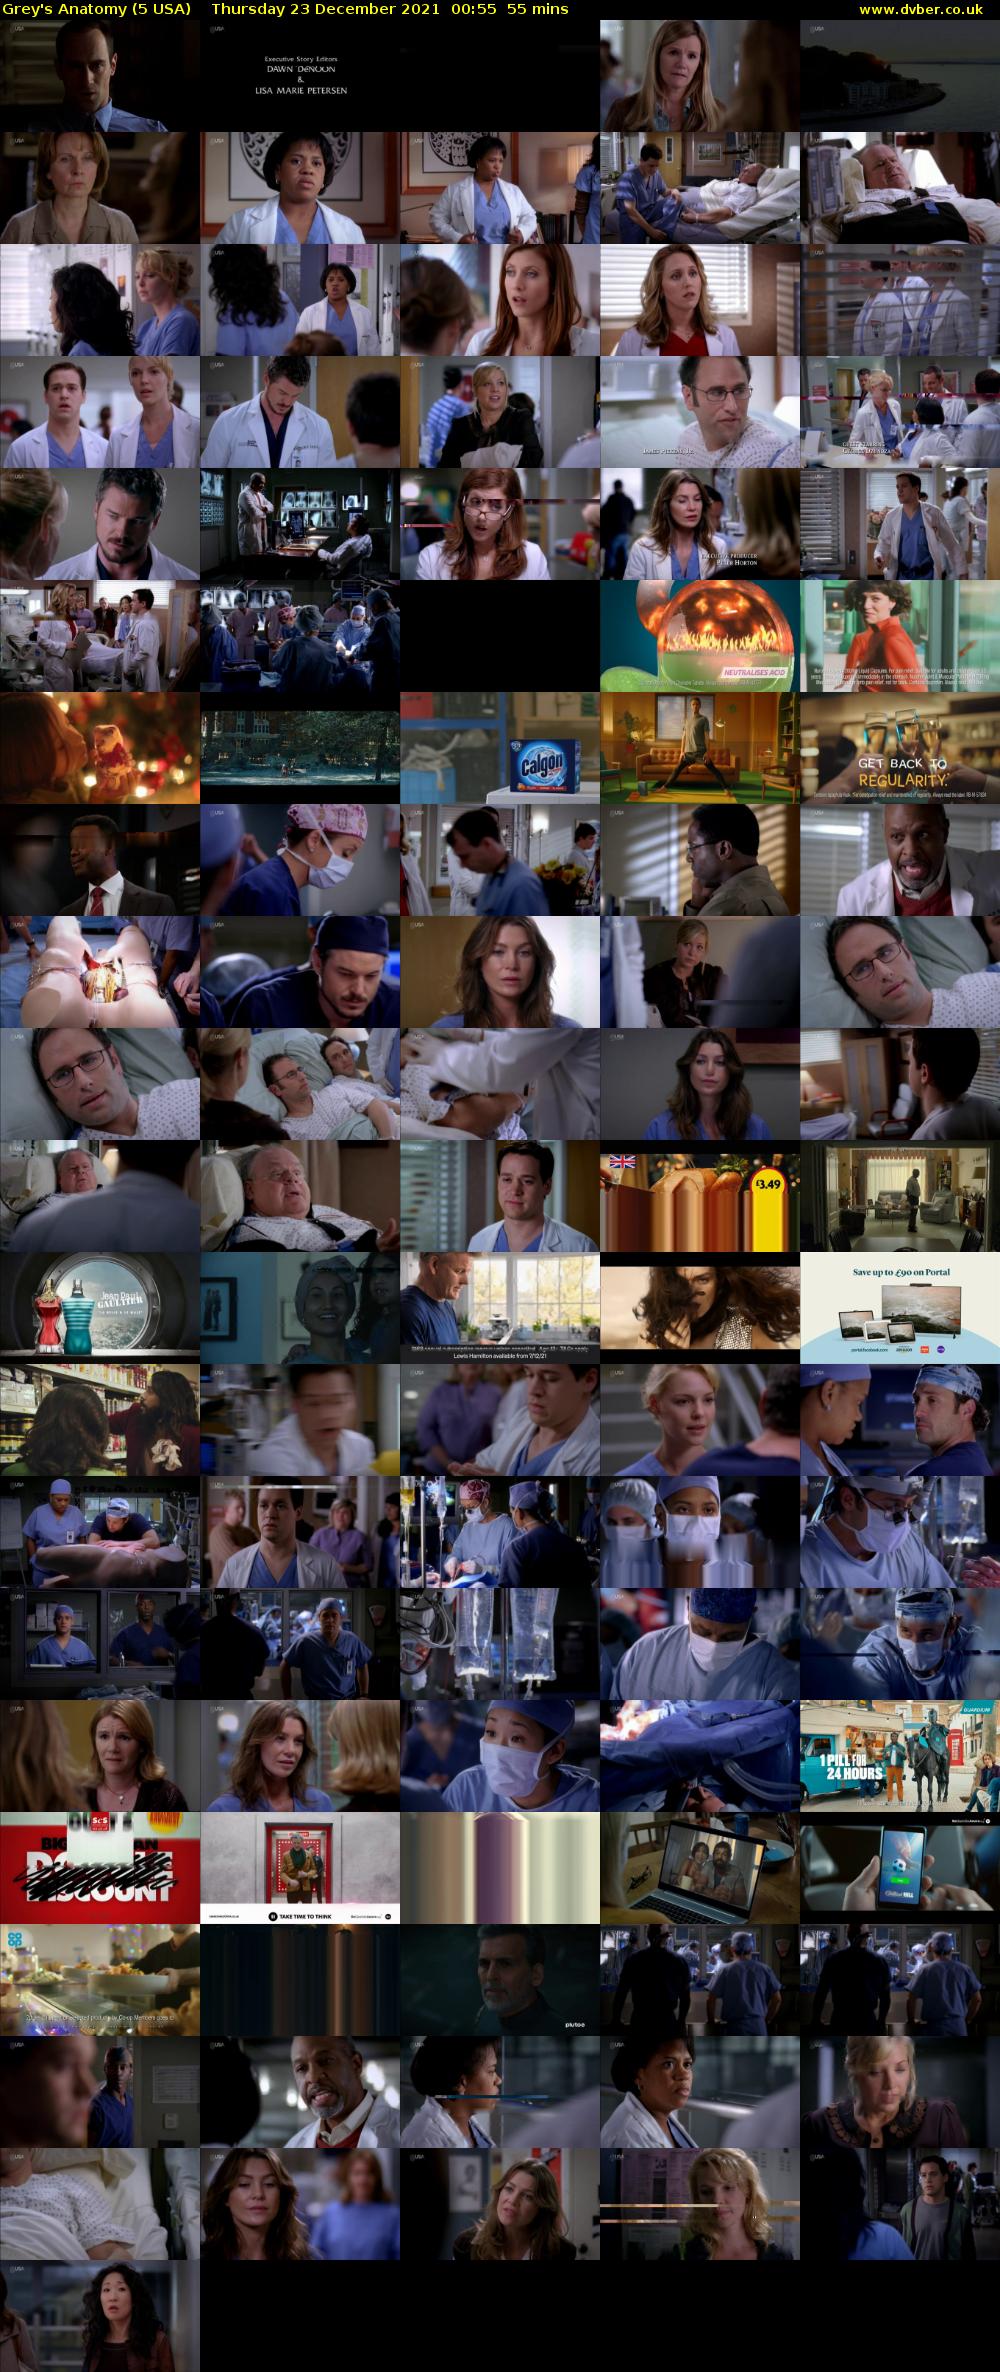 Grey's Anatomy (5 USA) Thursday 23 December 2021 00:55 - 01:50